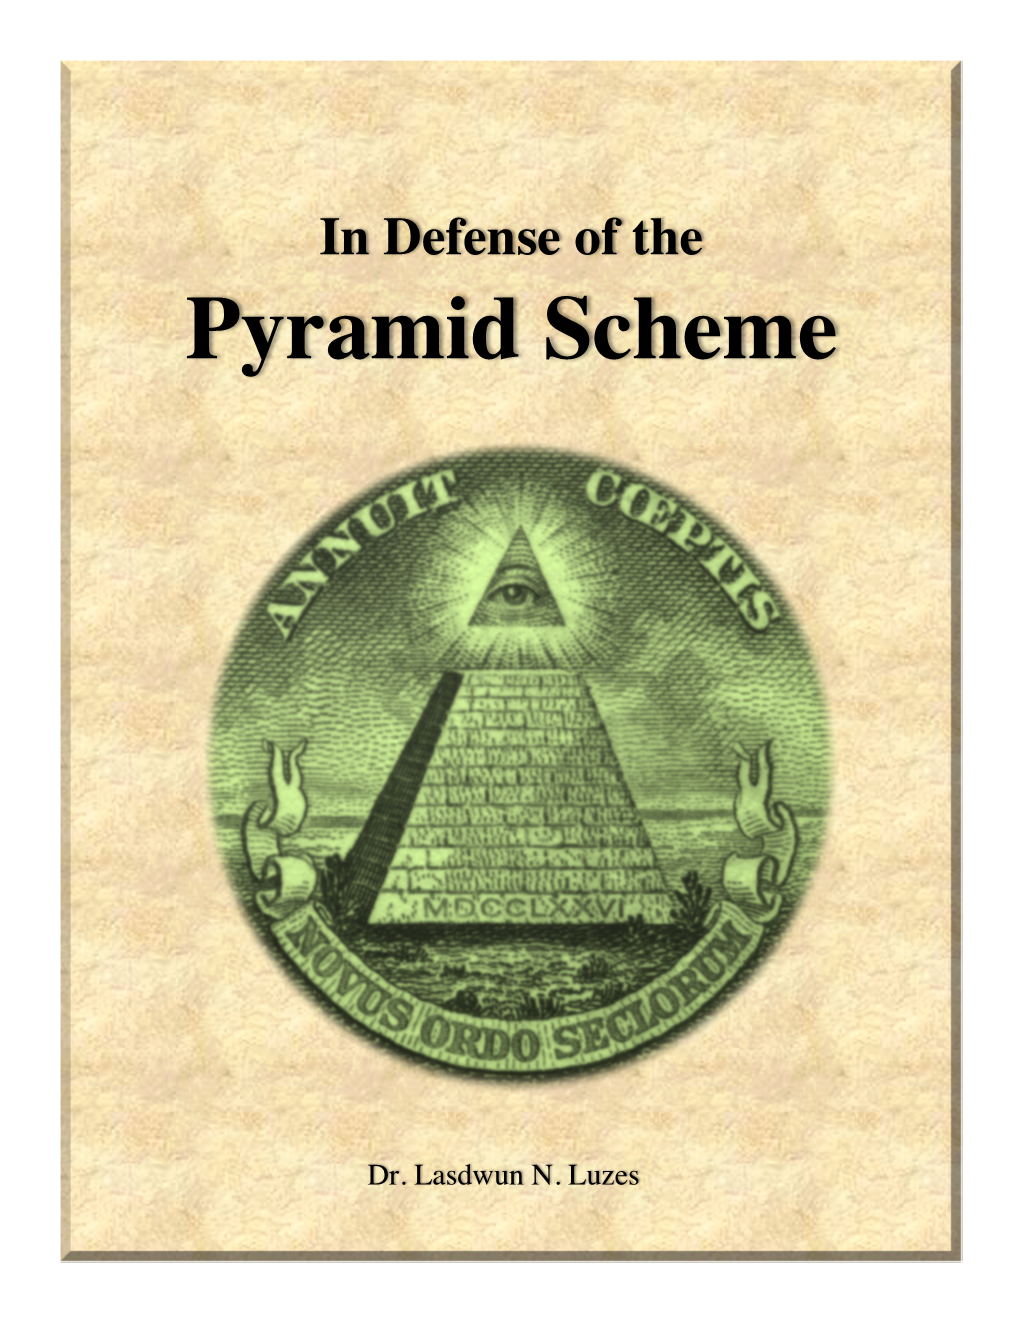 Defense of the Pyramid Scheme